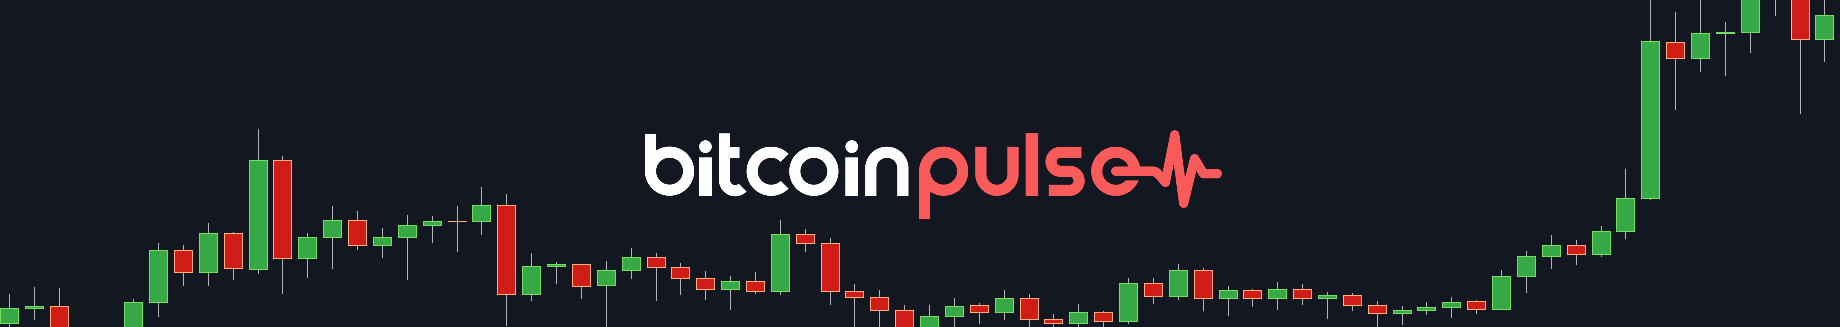 Coinbase and Consolidation - Bitcoin Pulse #105